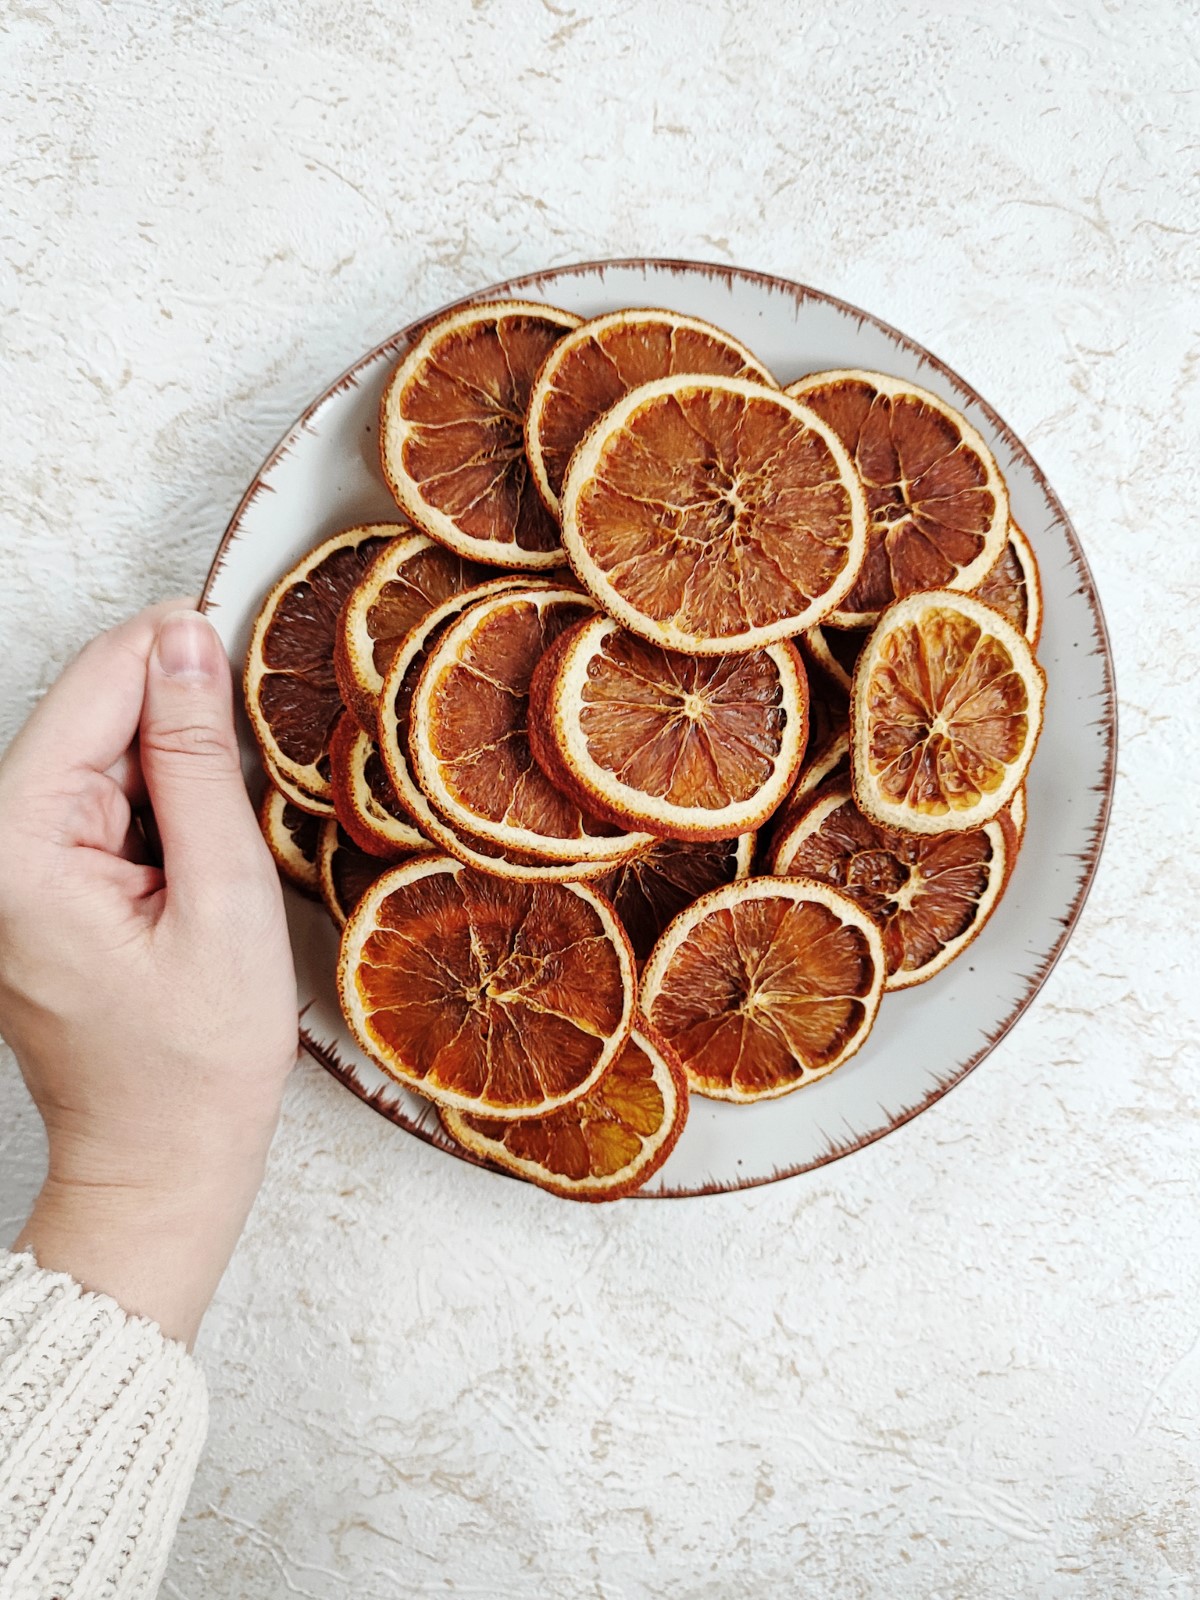 Dehidrirane pomaranče - dehydrated citrus